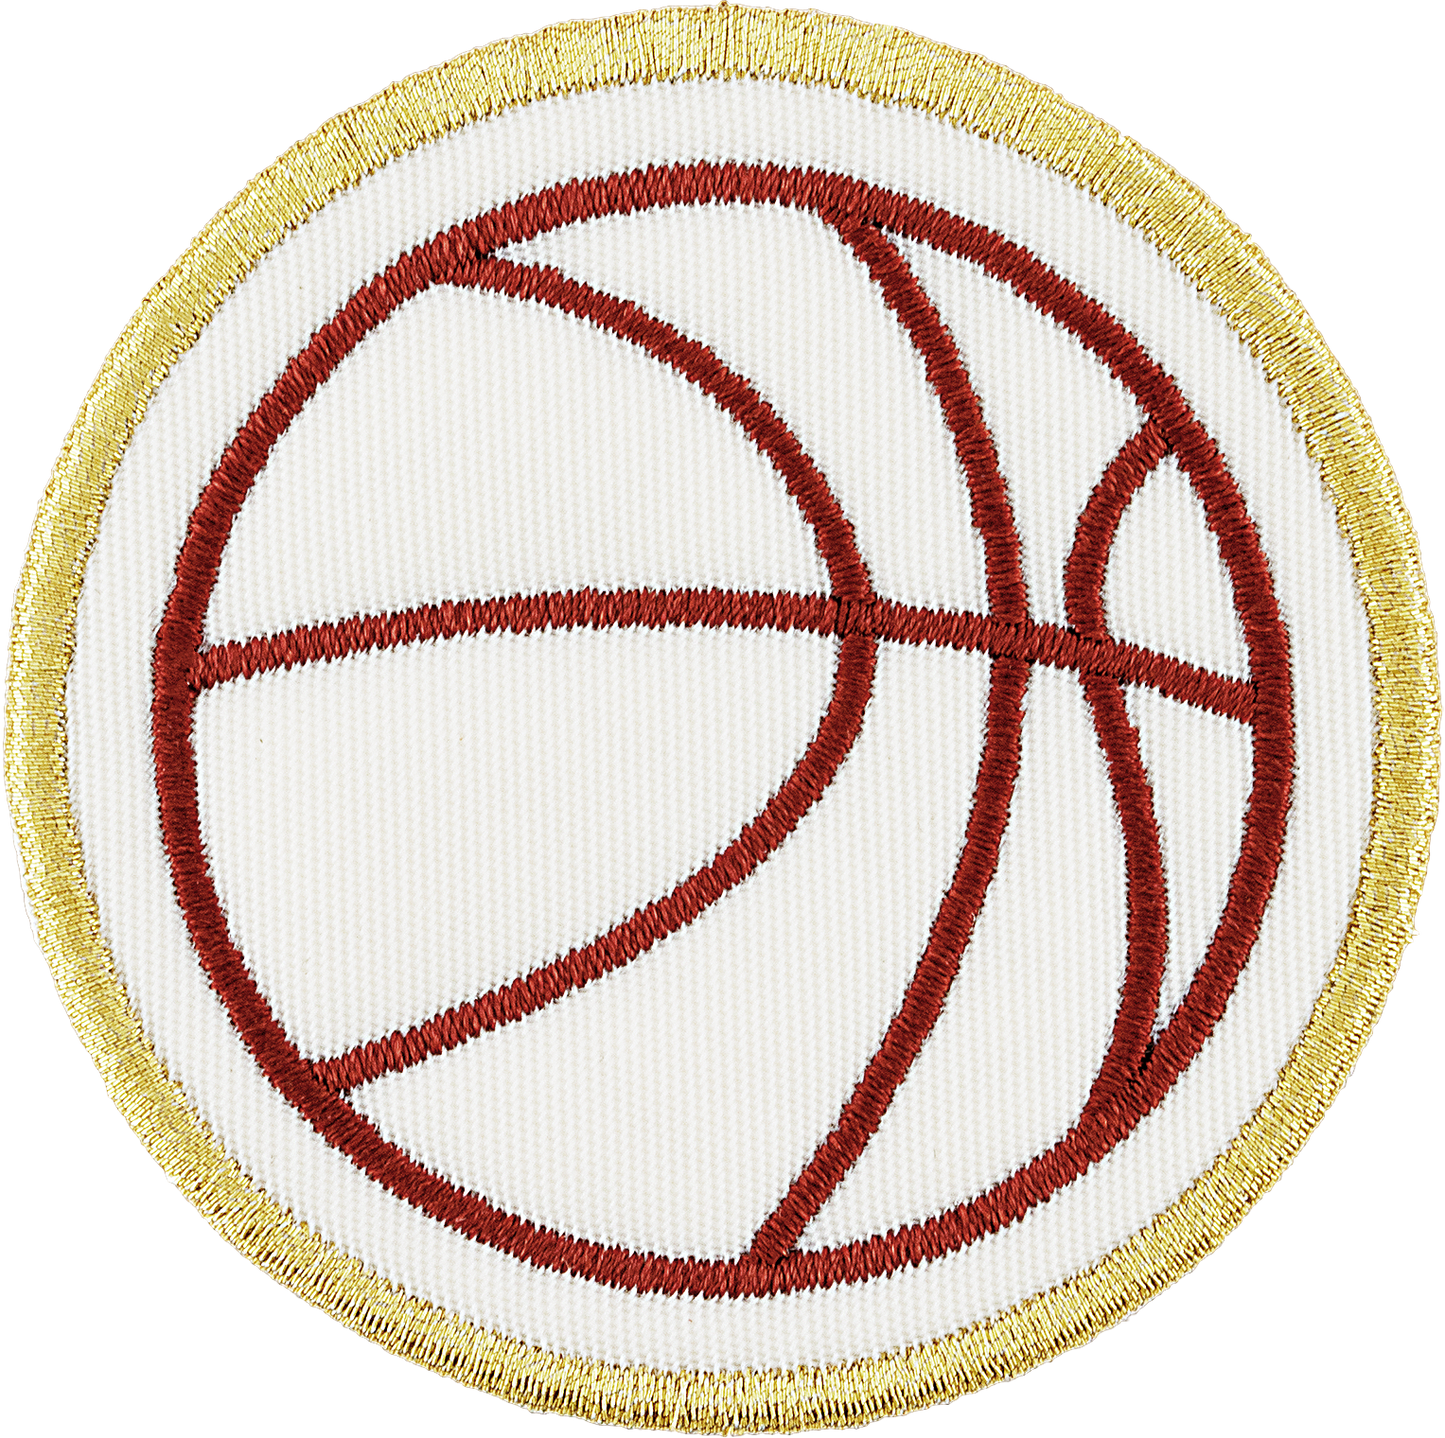 Basketball Patch